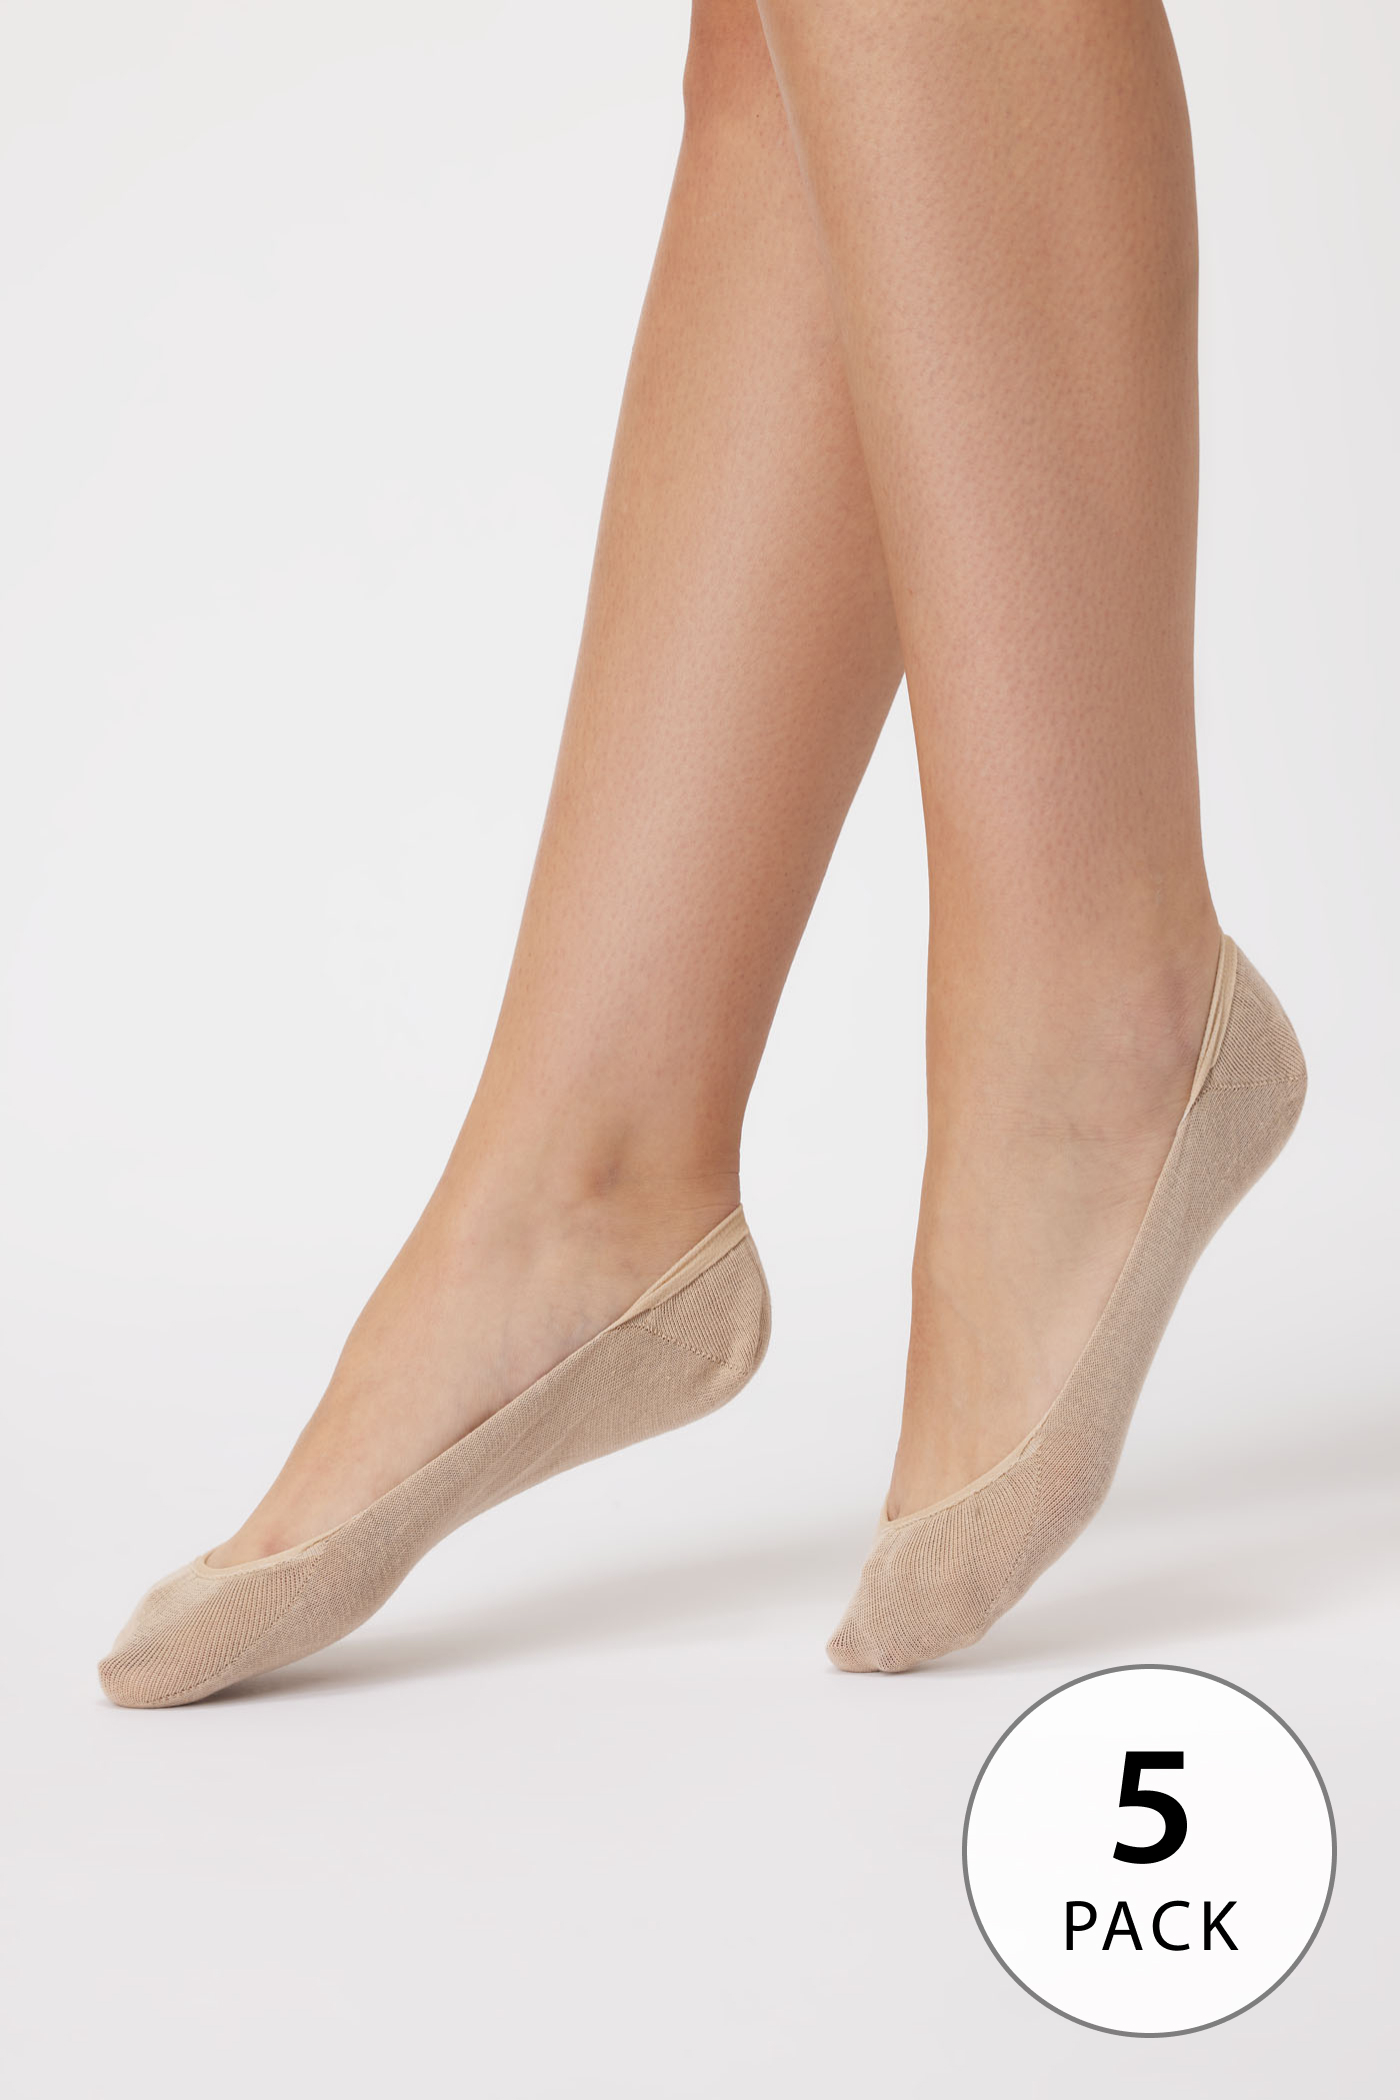 5 PACK pamut balerina zokni | Astratex.hu